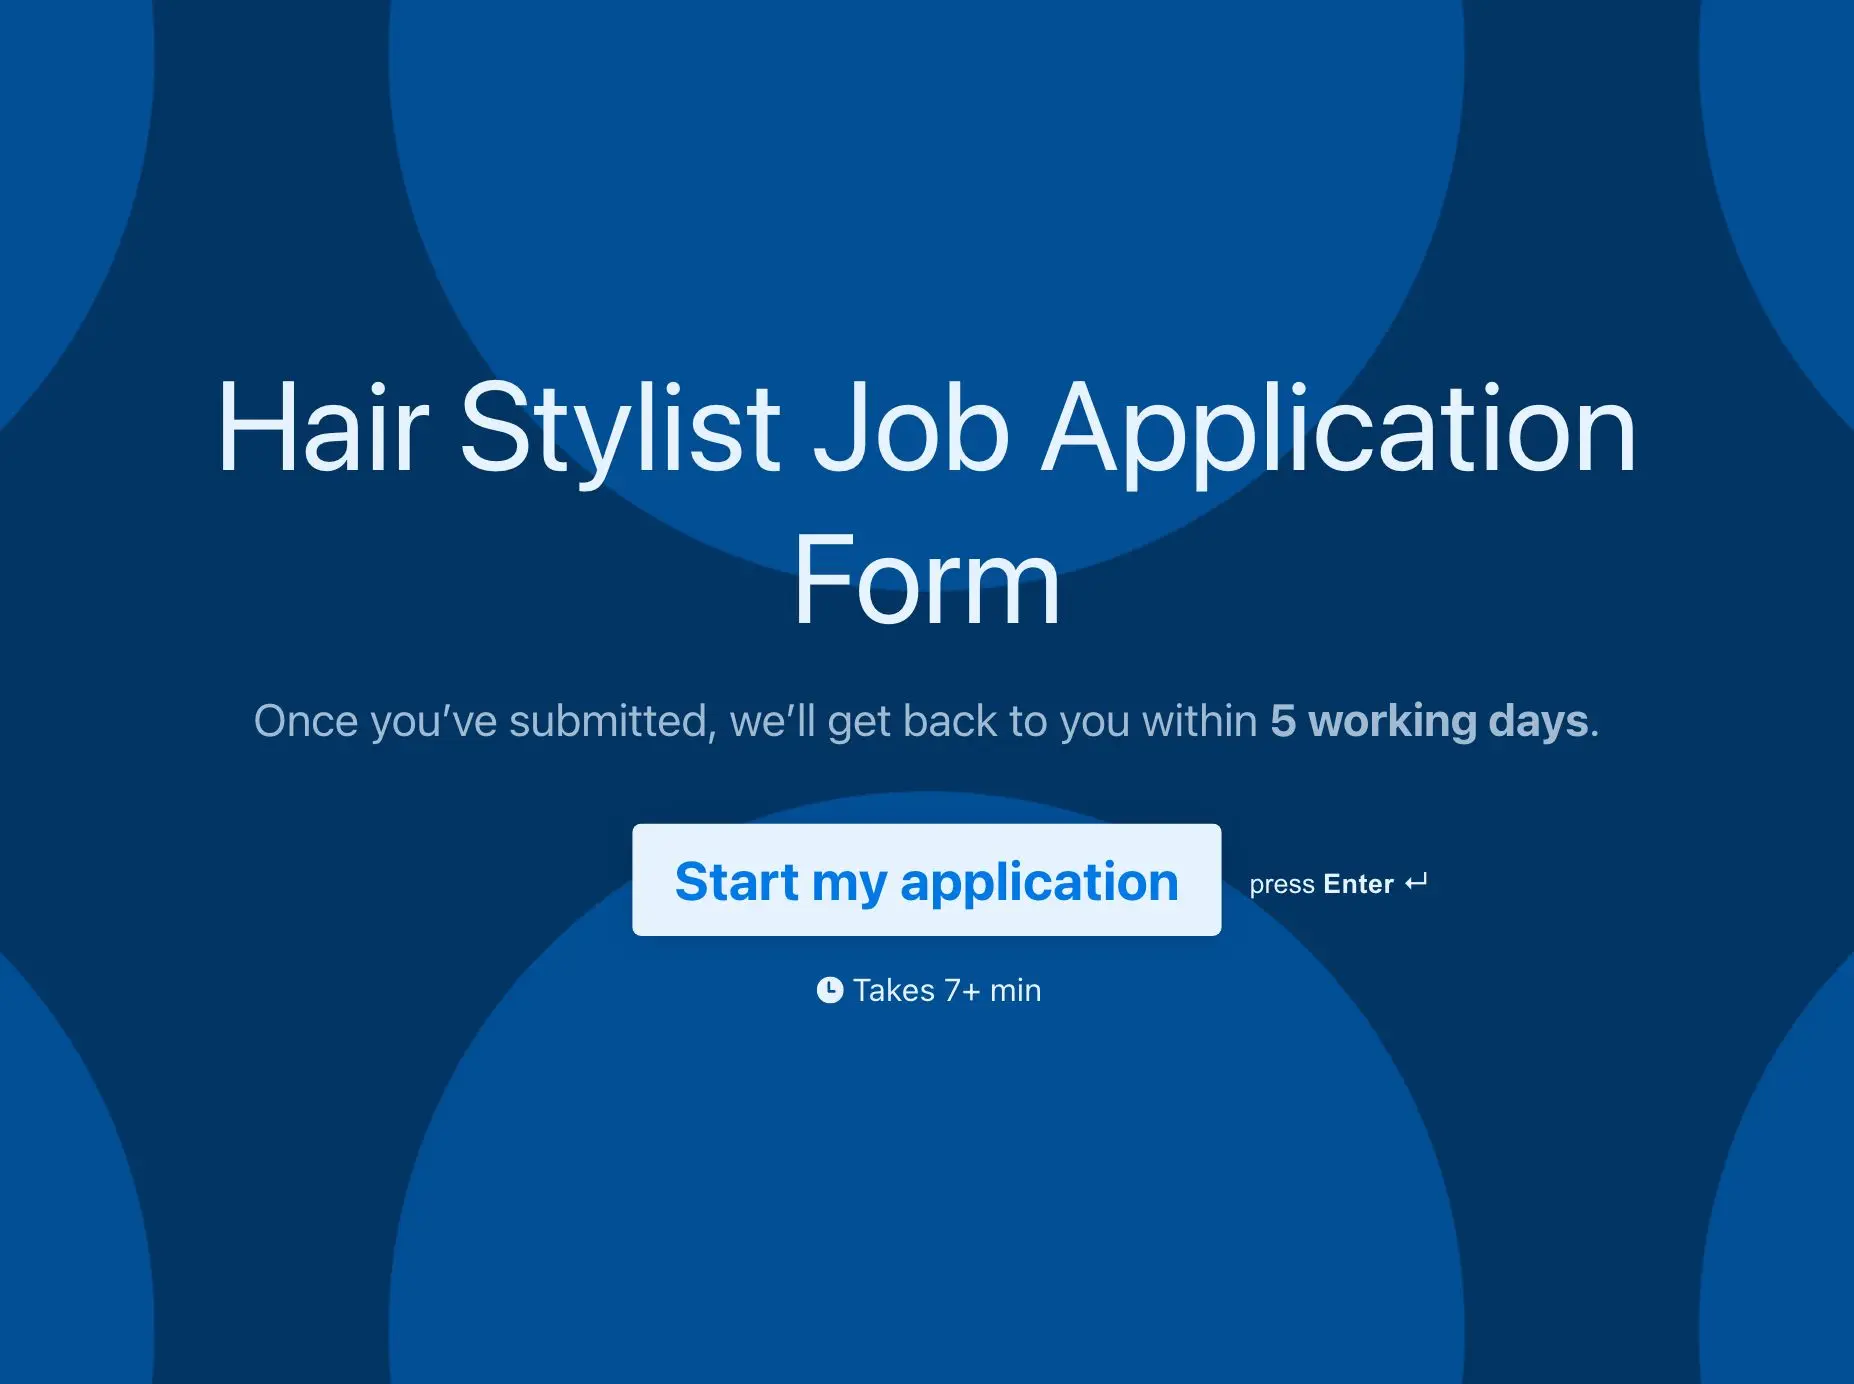 Hair Stylist Job Application Form Template Hero